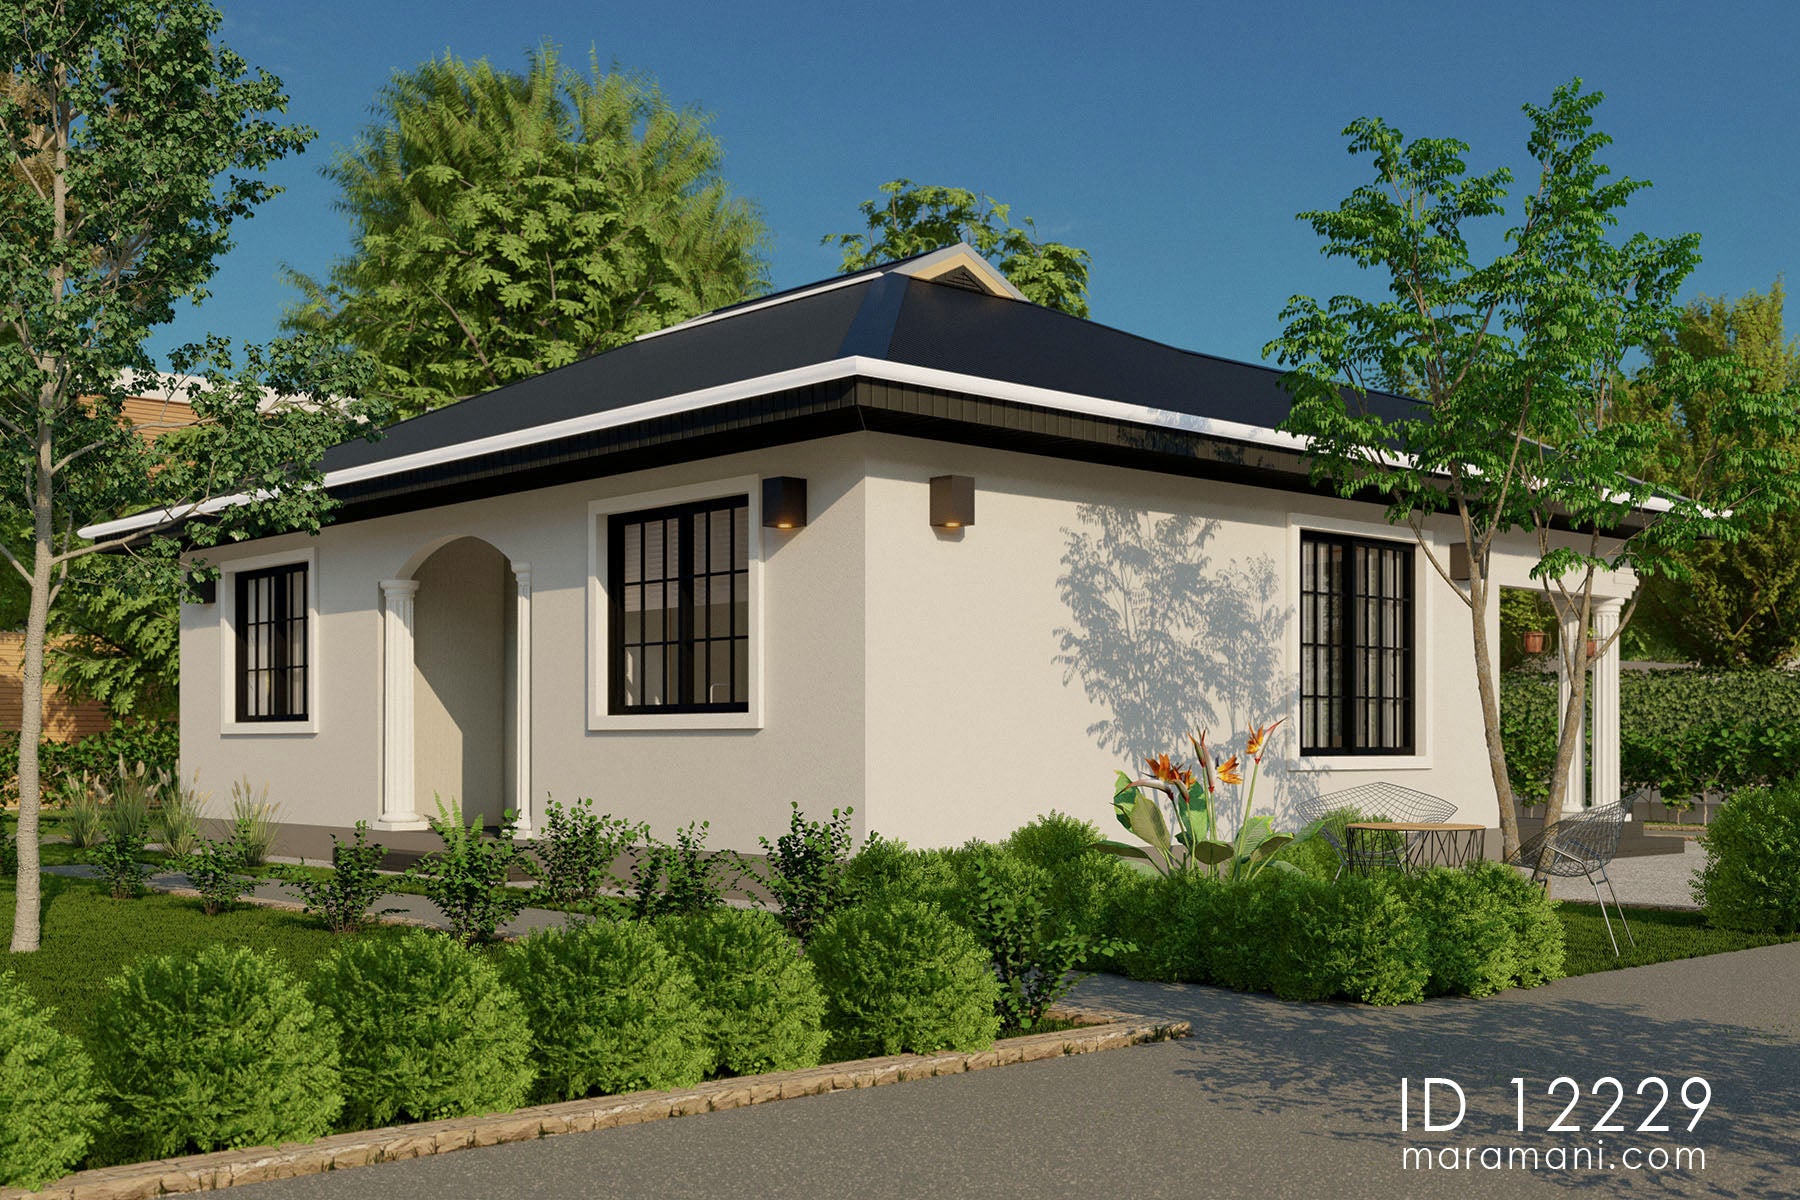 Tanzanian 2-Bedroom House Plan - ID 12229